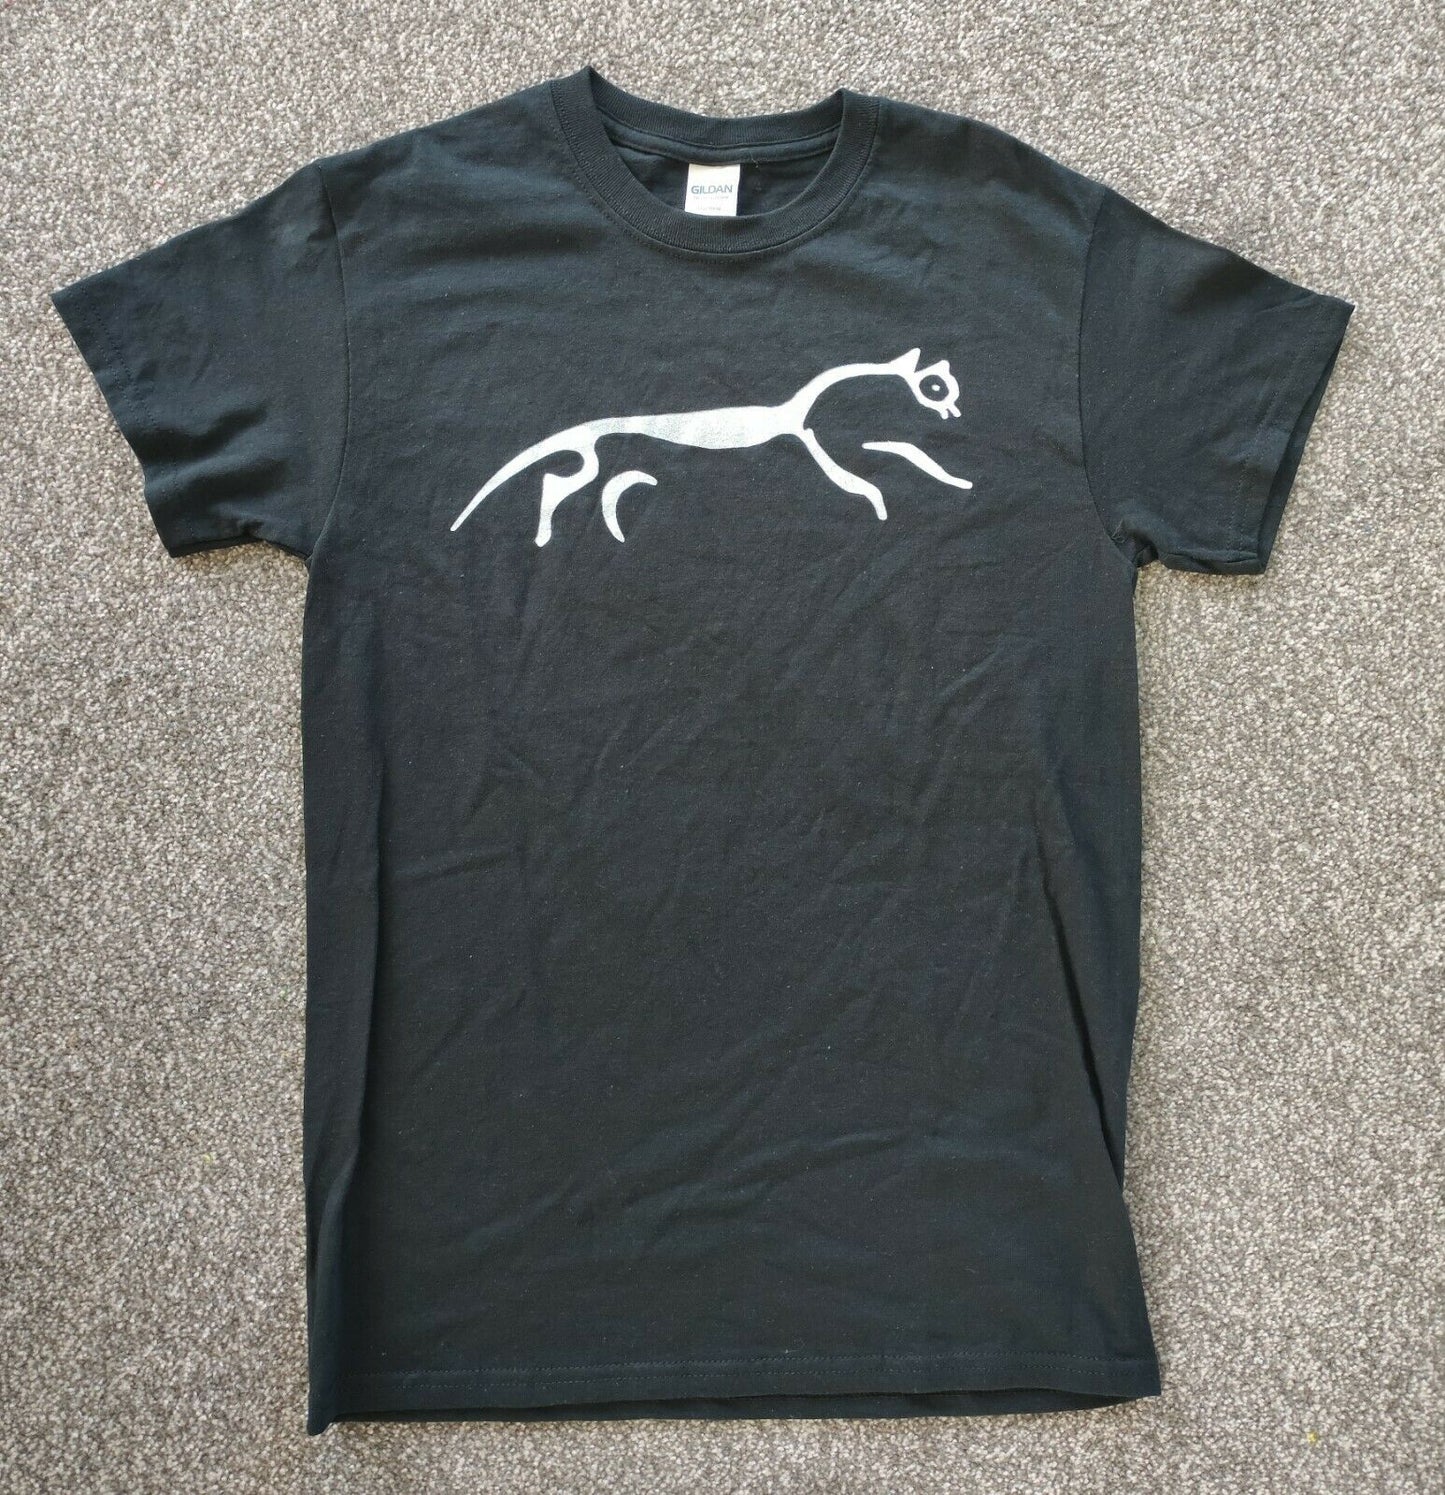 BNWOT Black White Horse Of Uffington T-Shirt Small FOLK/HERITAGE